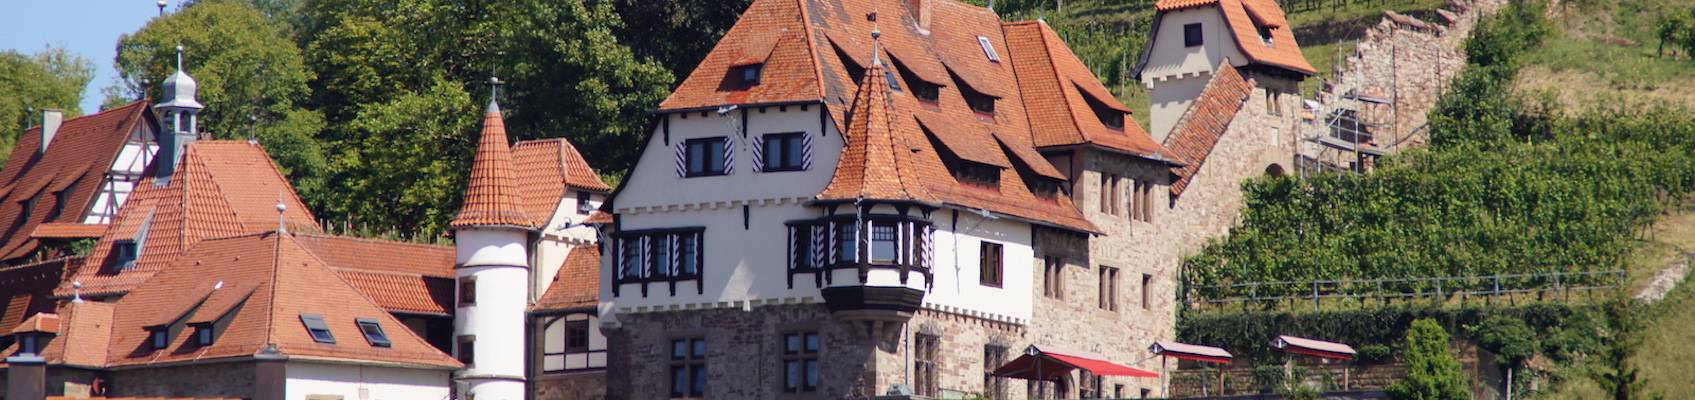 Schloss Beilstein 1